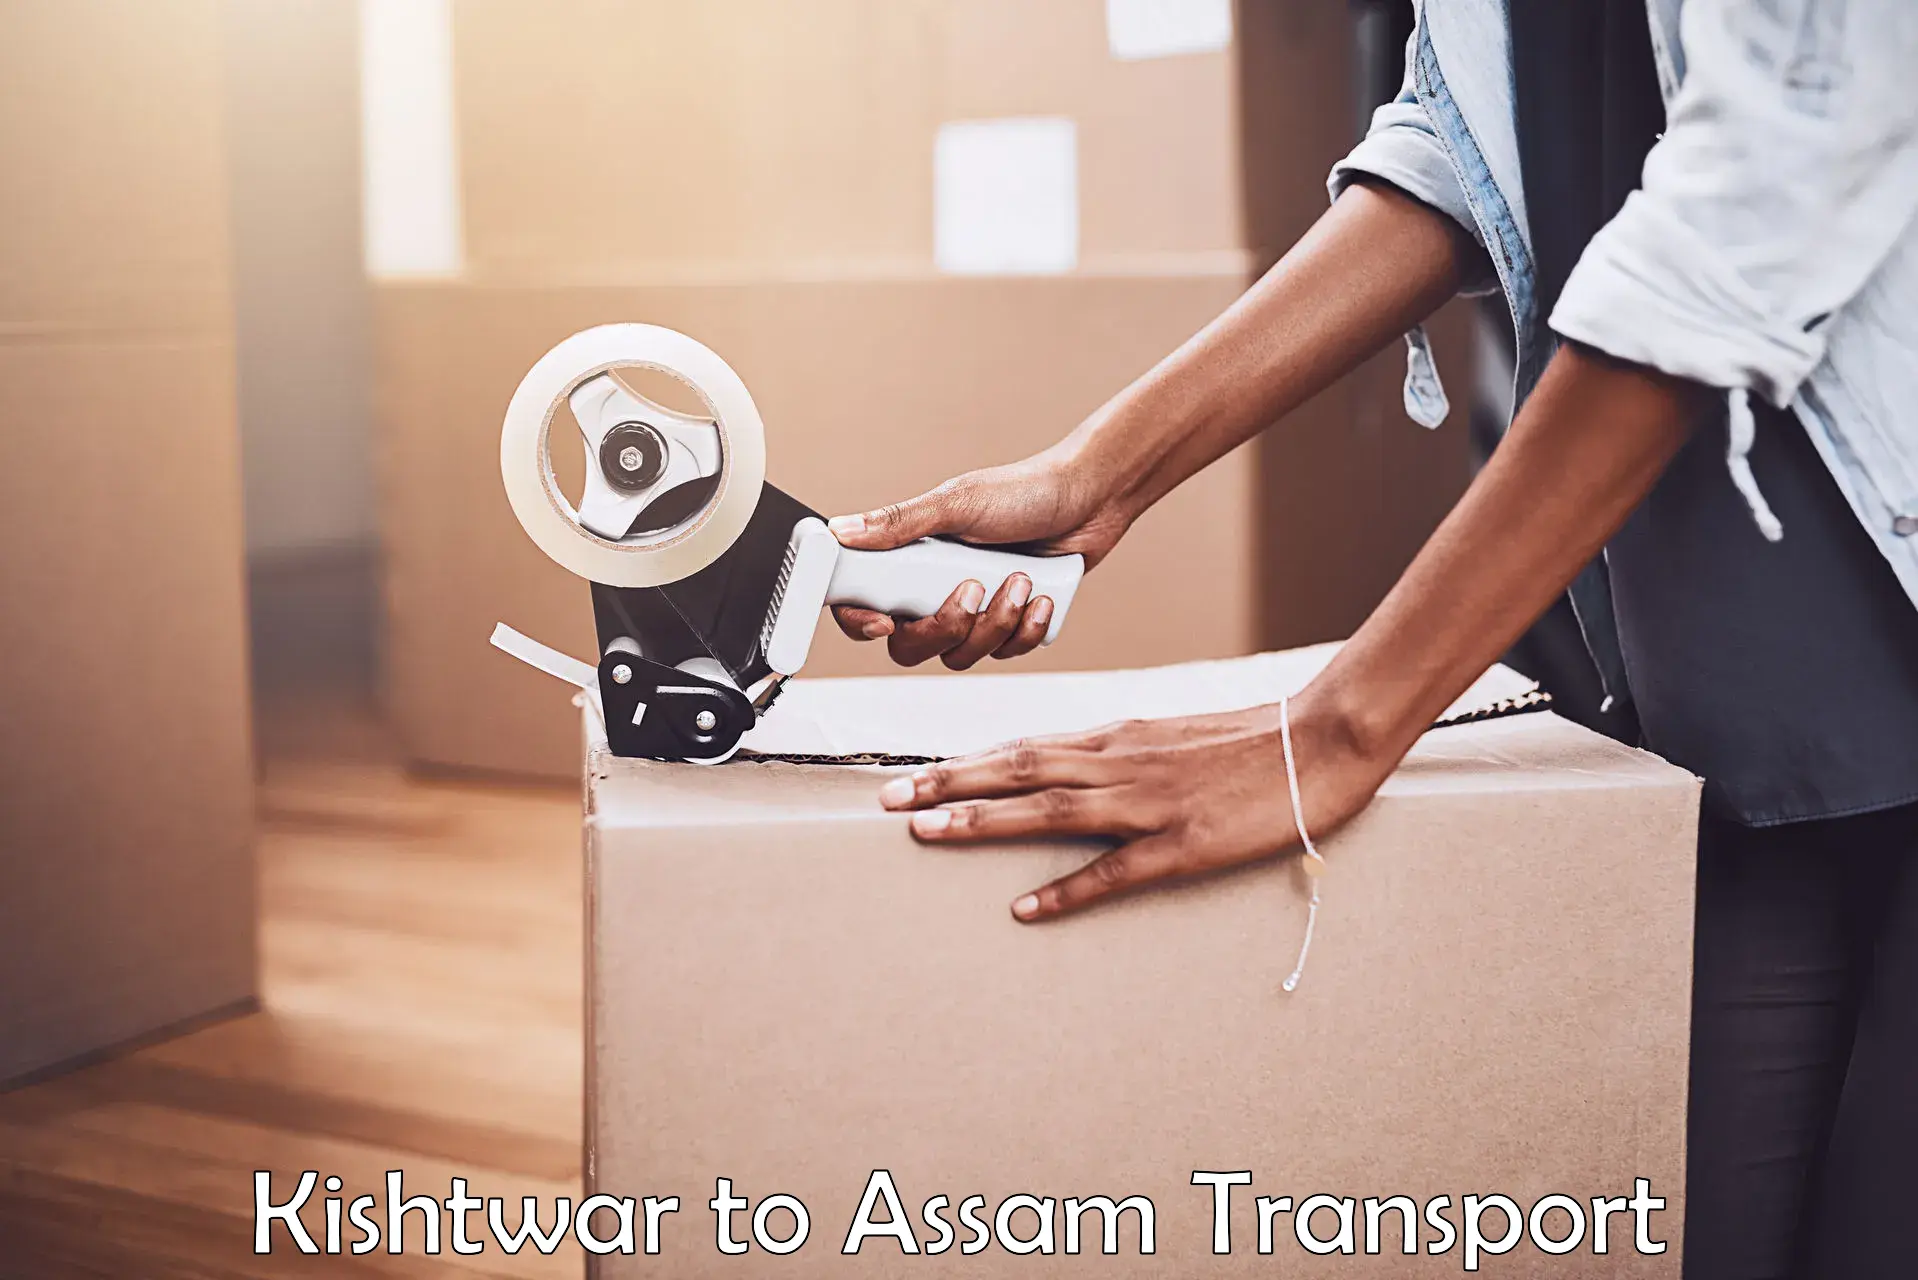 Shipping partner Kishtwar to Lala Assam